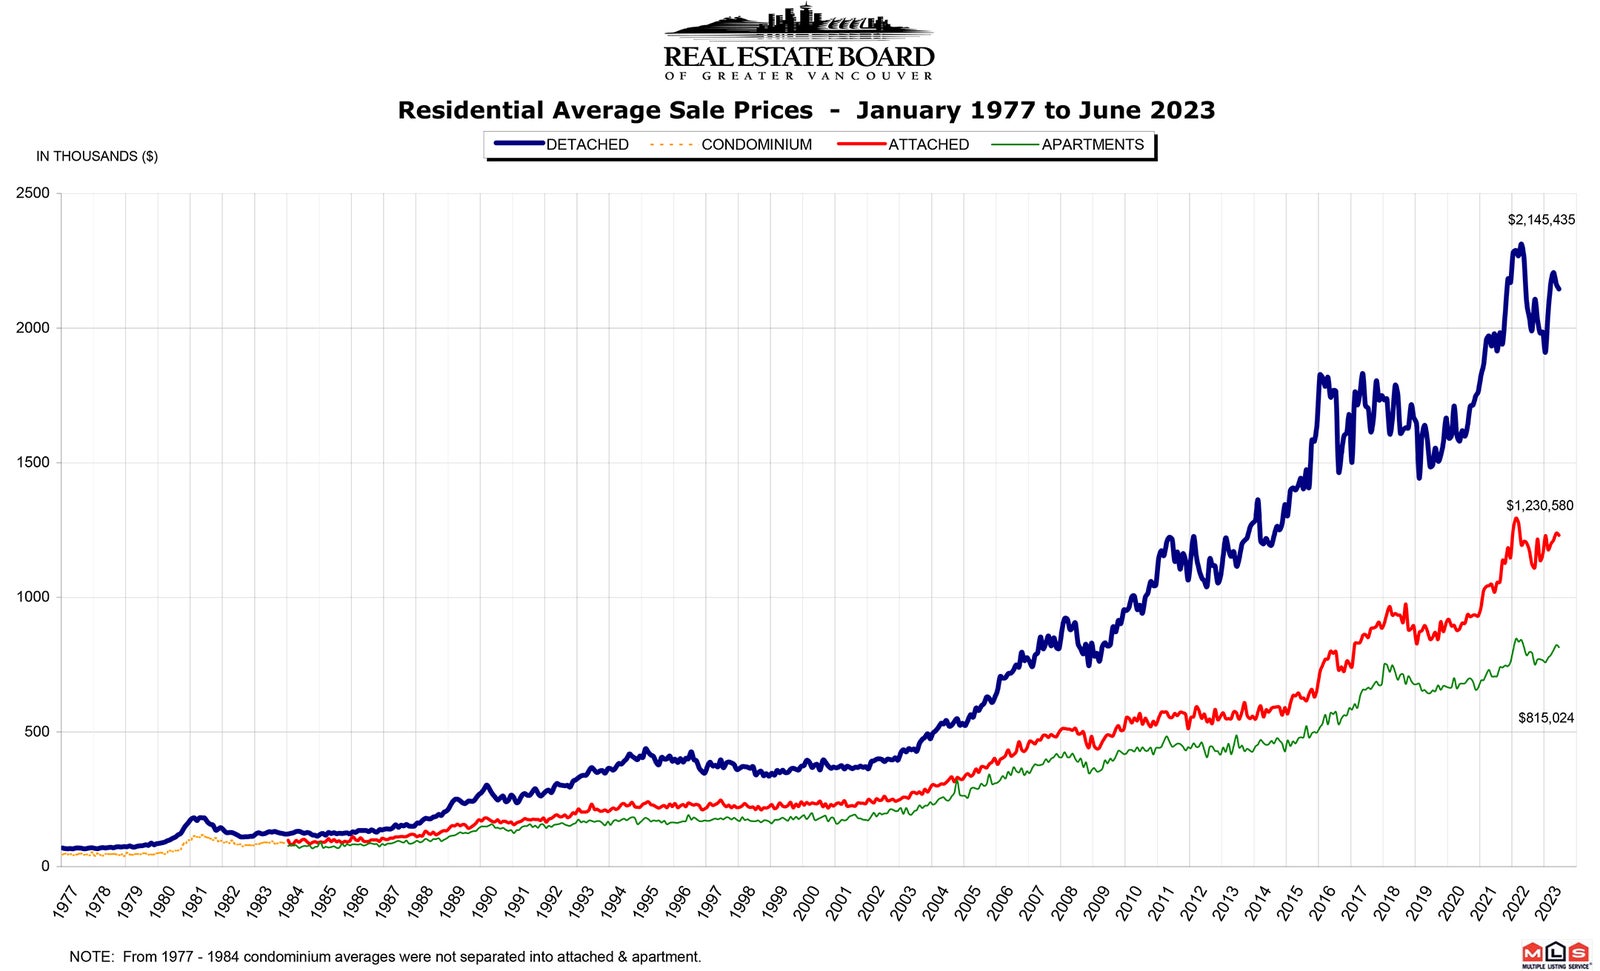 Residential Average Sale Price RASP June 2023 Real Estate Vancouver Chris Frederickson